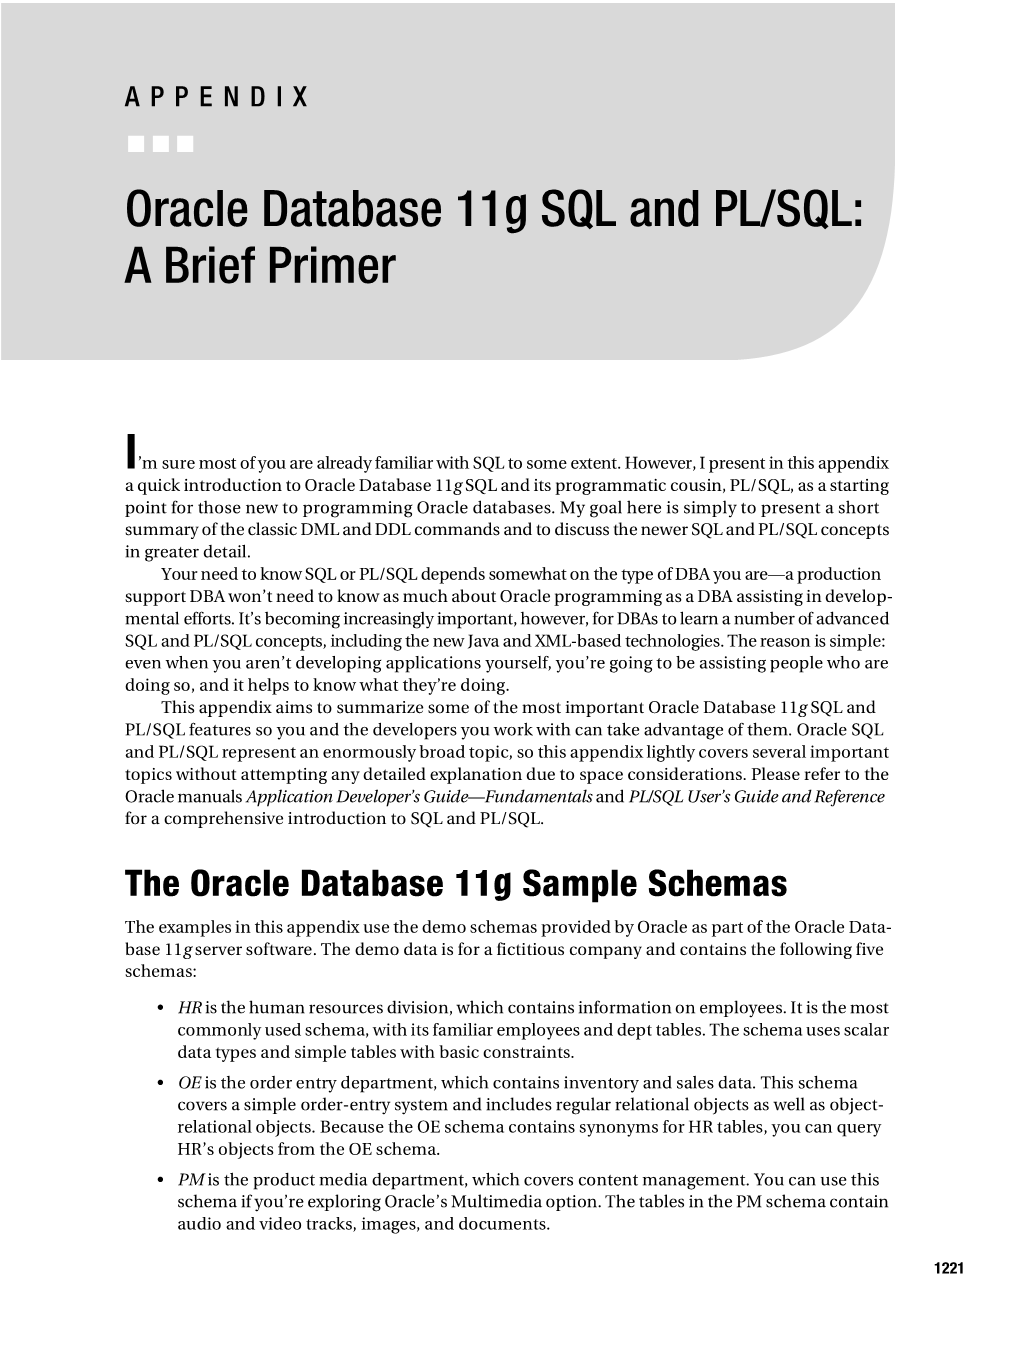 Oracle Database 11G SQL and PL/SQL: a Brief Primer